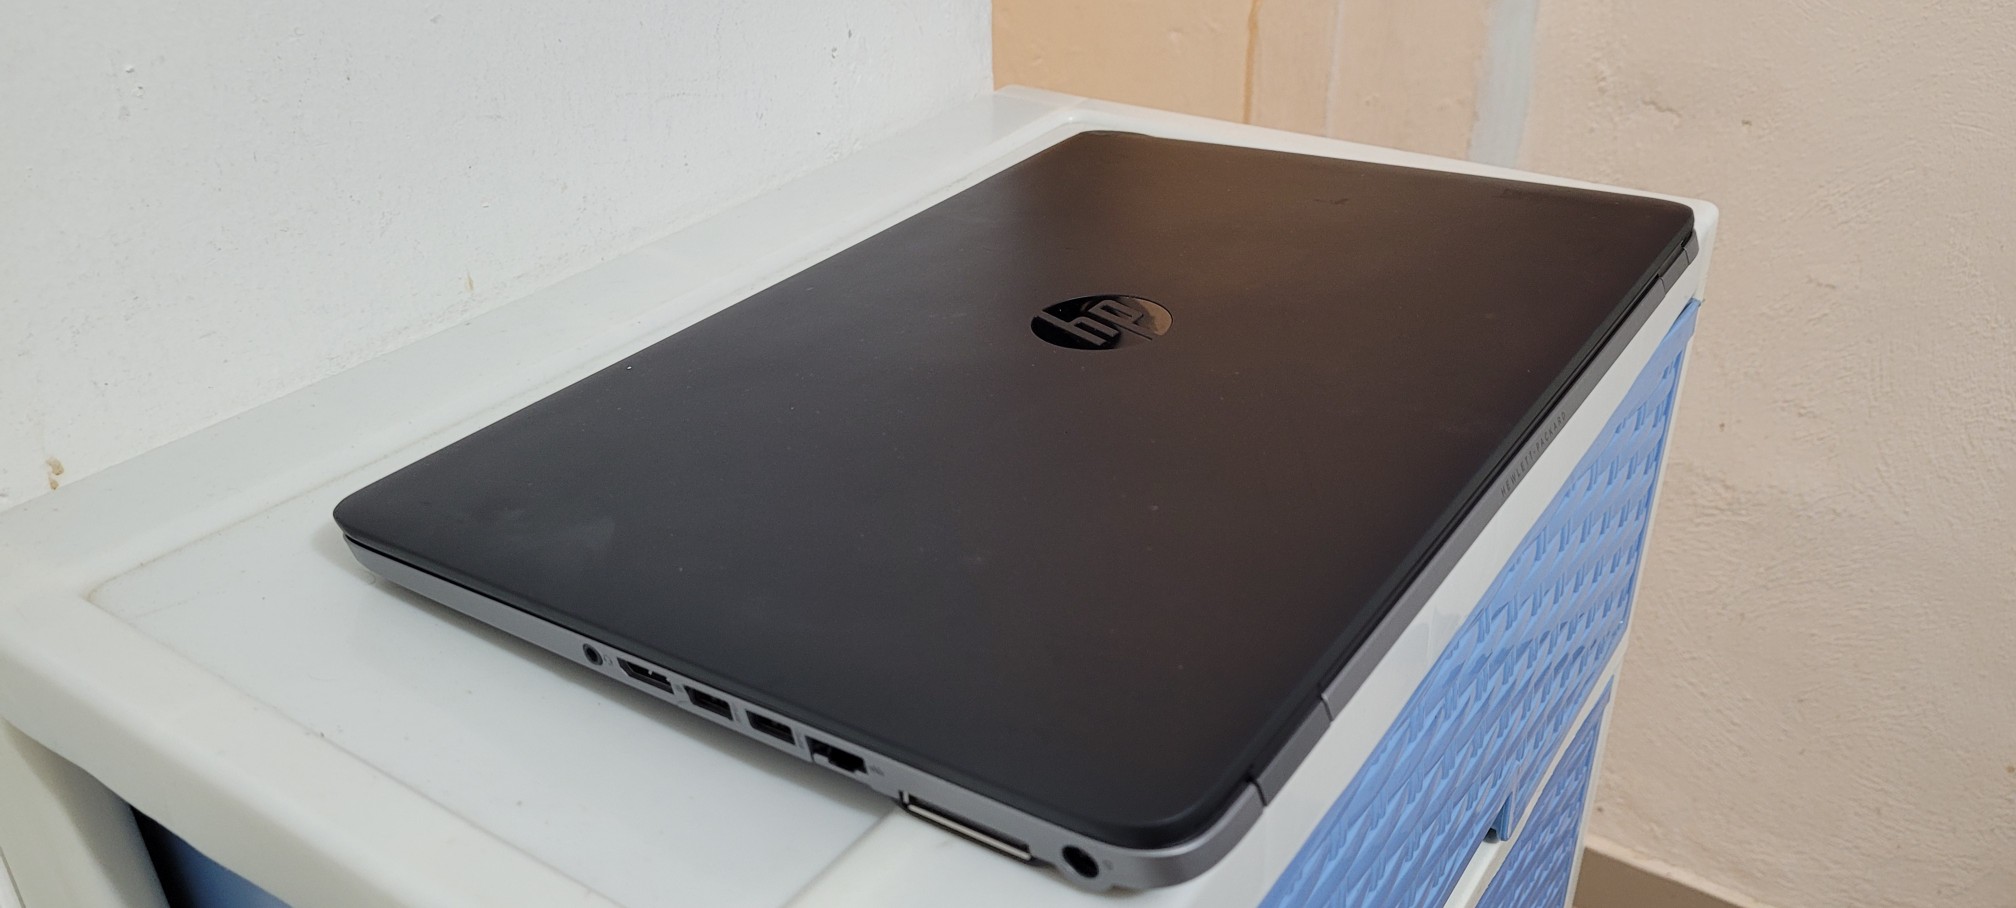 computadoras y laptops - Hp Elitebook Slim 17 Pulg Core i7 Ram 16gb Disco 500gb SSD Video 8gb 2